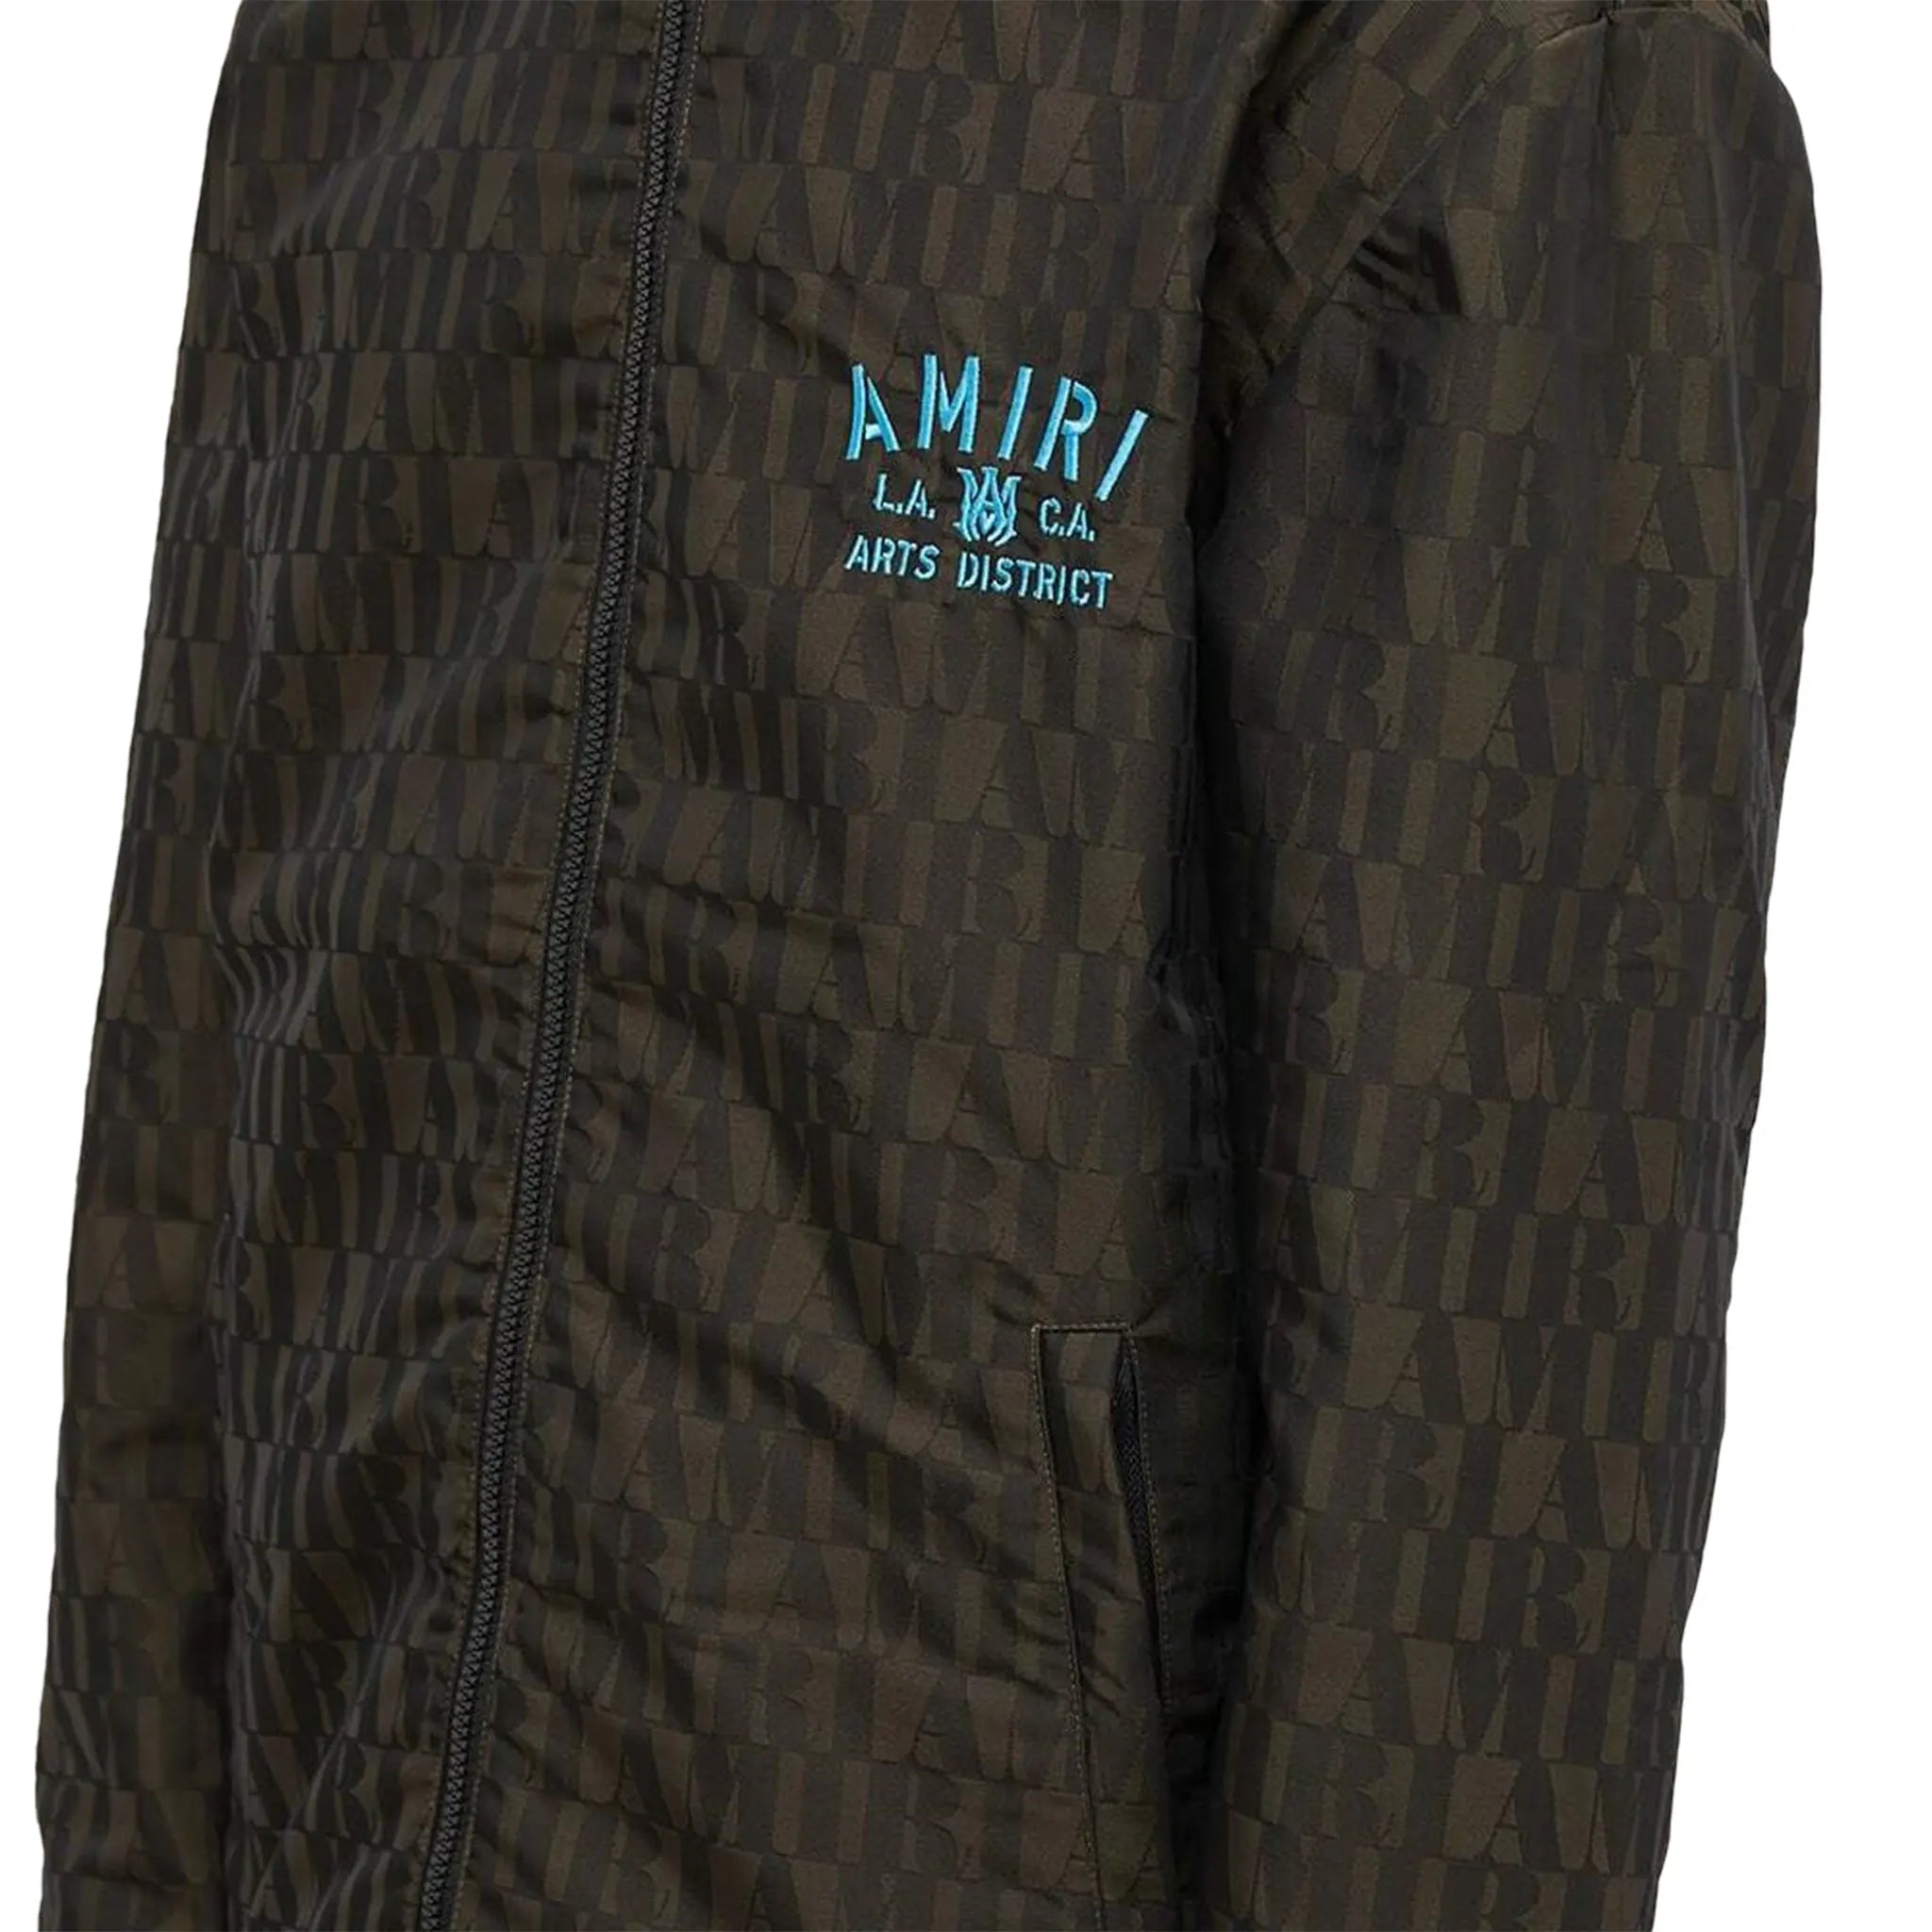 Detail view of Amiri Jacquard Black Loden Track Jacket PF22MPF009-996